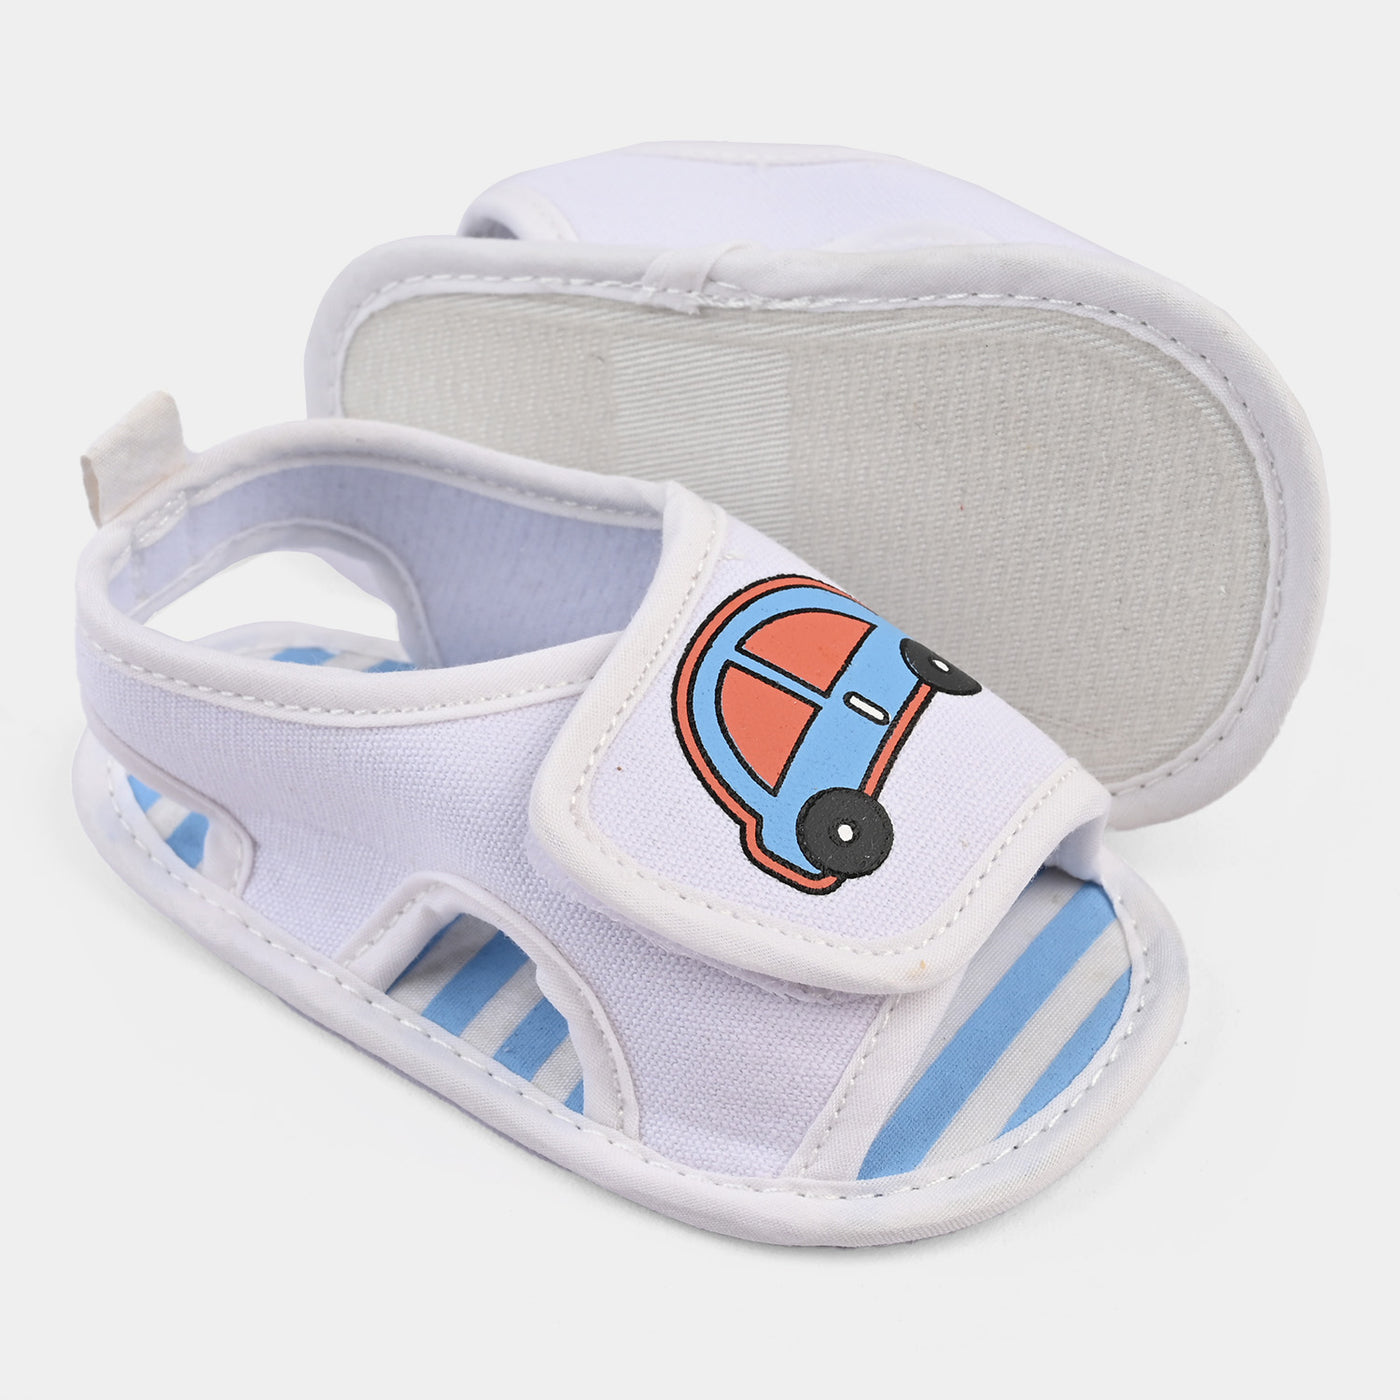 Baby Boy Shoes C-462-White